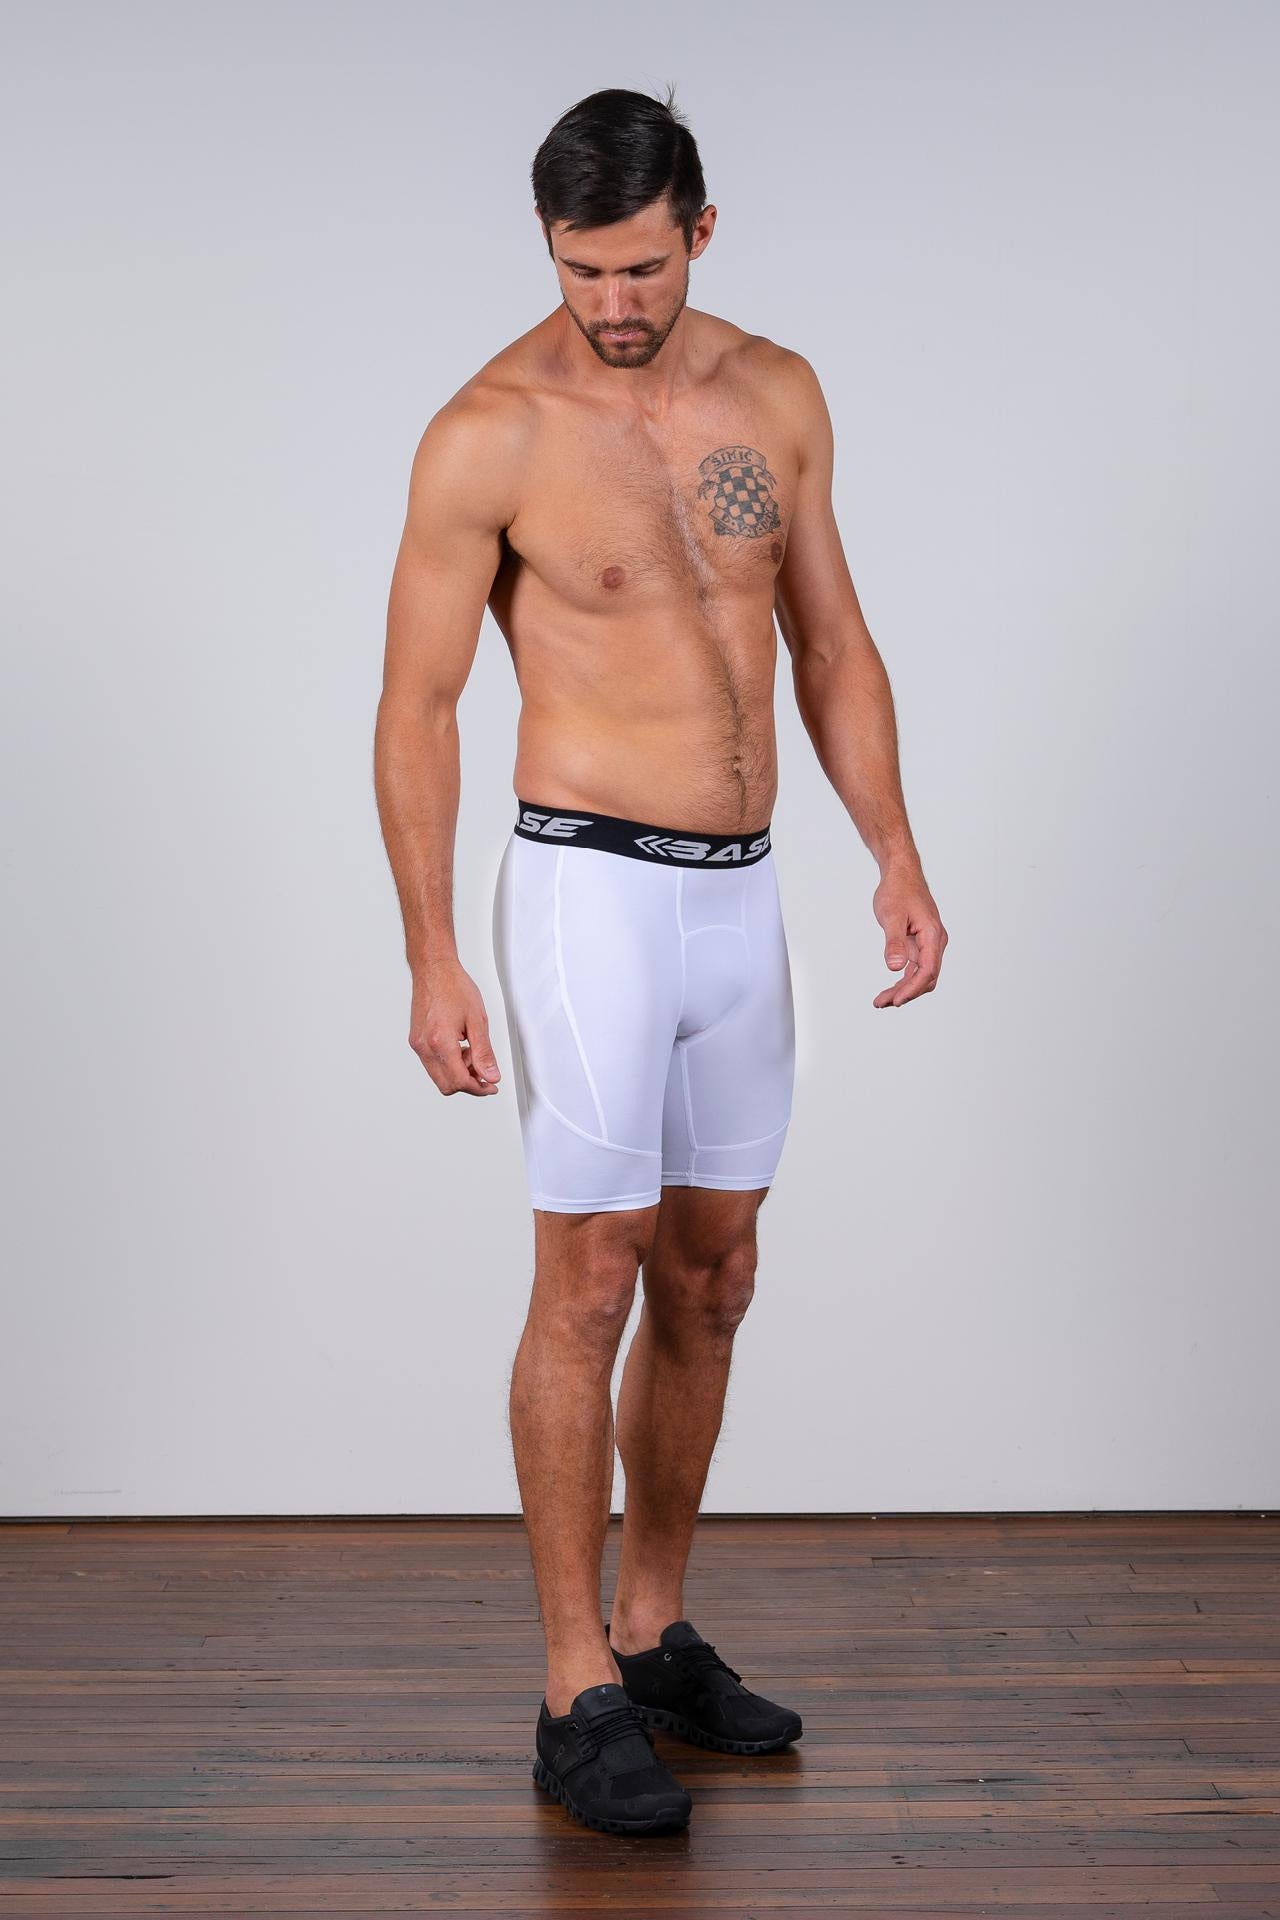 BASE Men's Compression Shorts - White - Adelaide 36ers